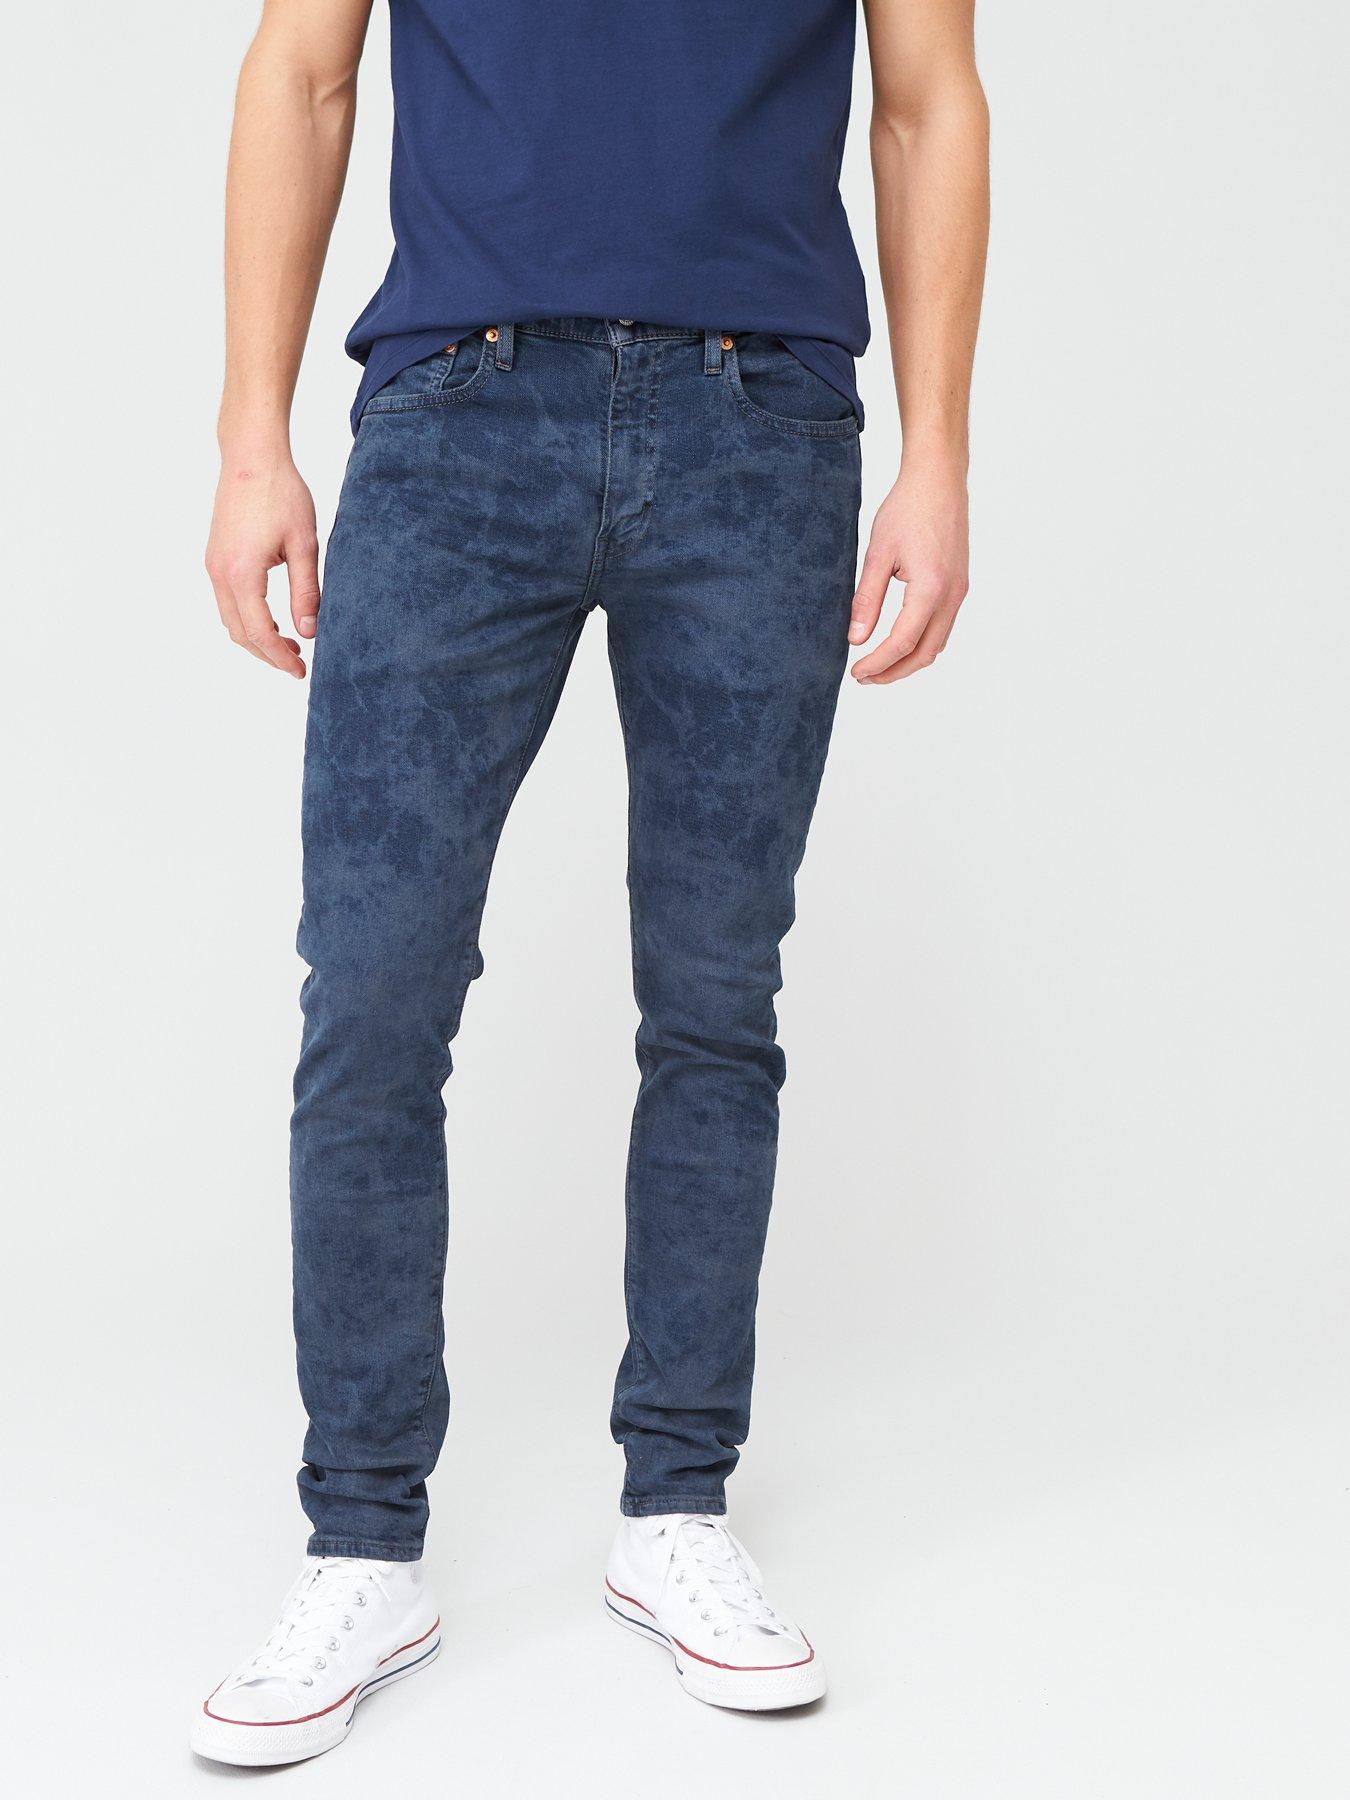 levi's stretch skinny jeans mens